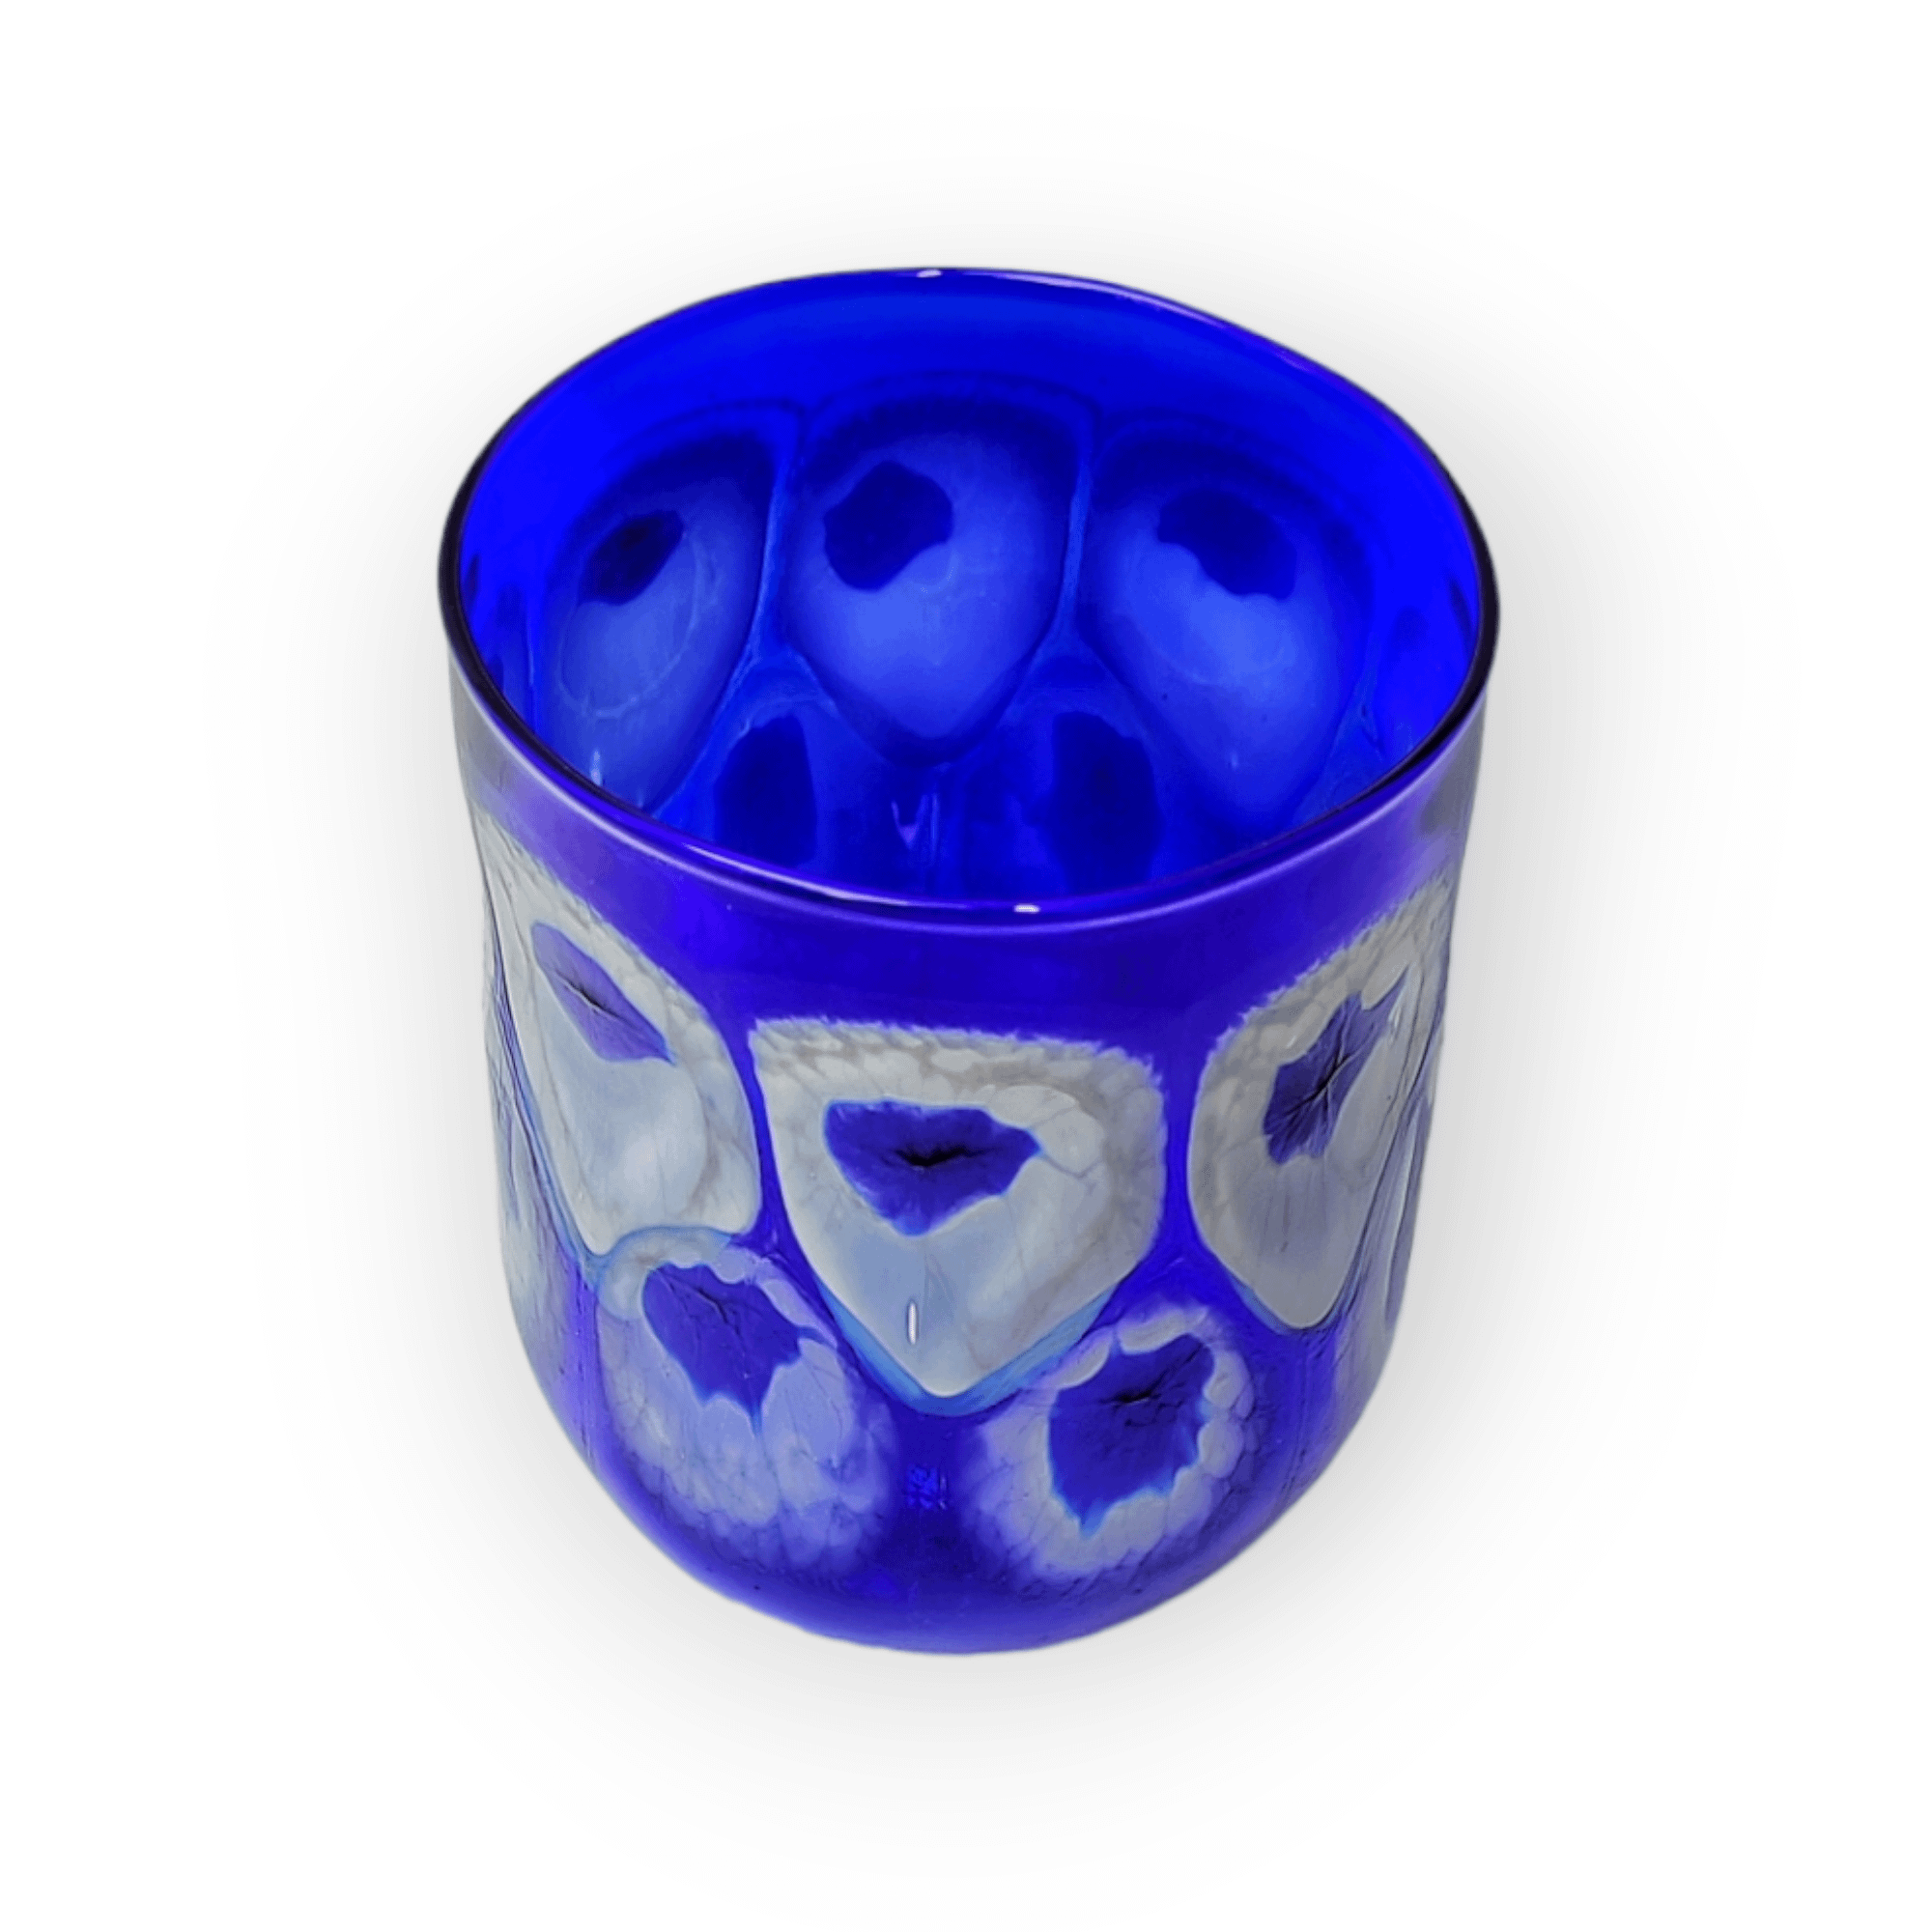 Blu glass